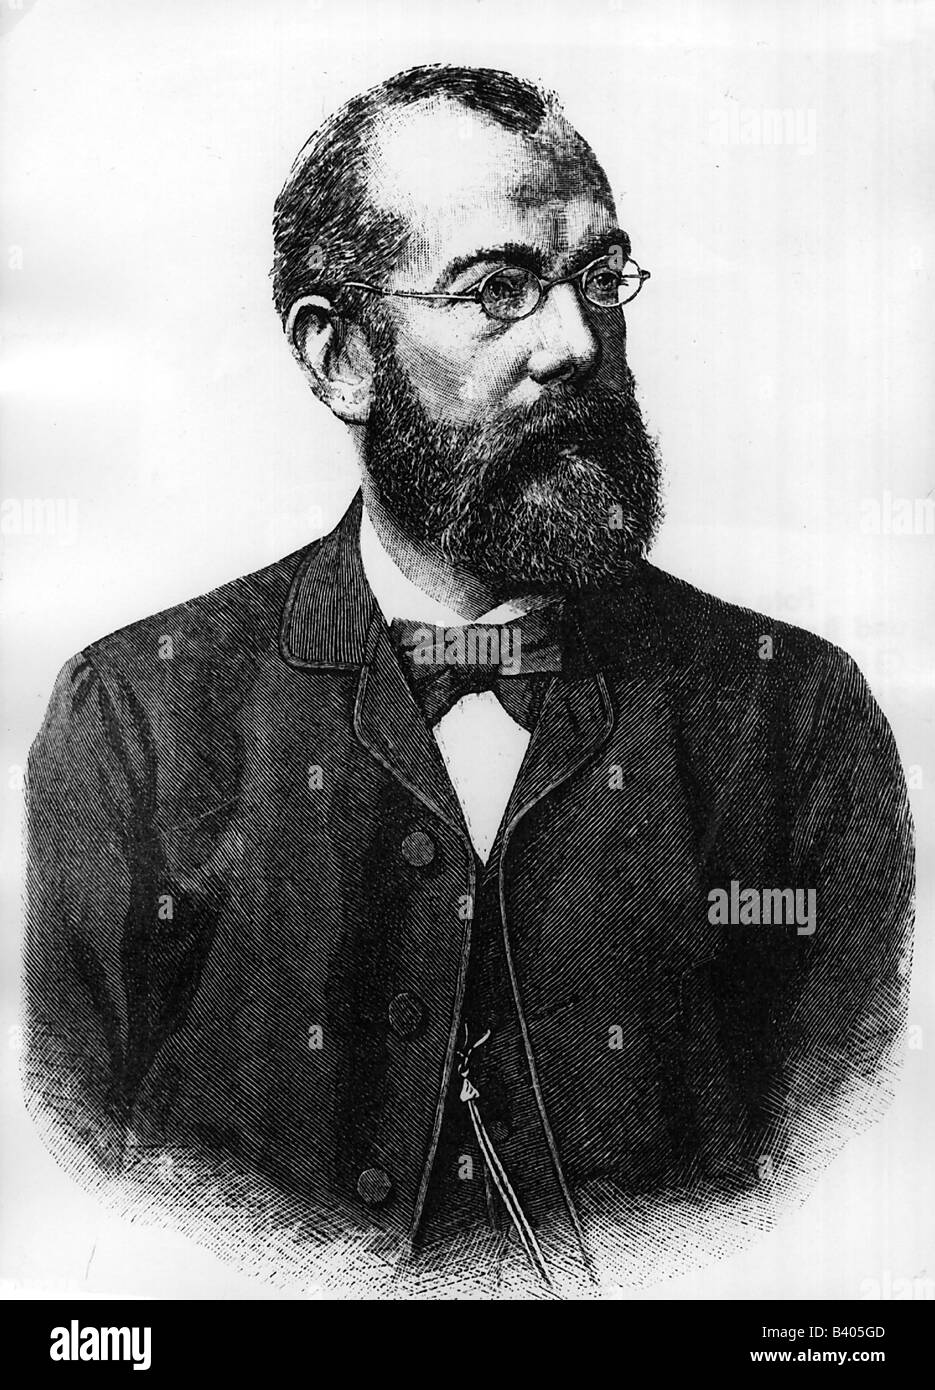 Koch, Robert, 11.12.1843 - 27.5.1910, German scientist (physician), portrait, engraving, 19th century, Stock Photo